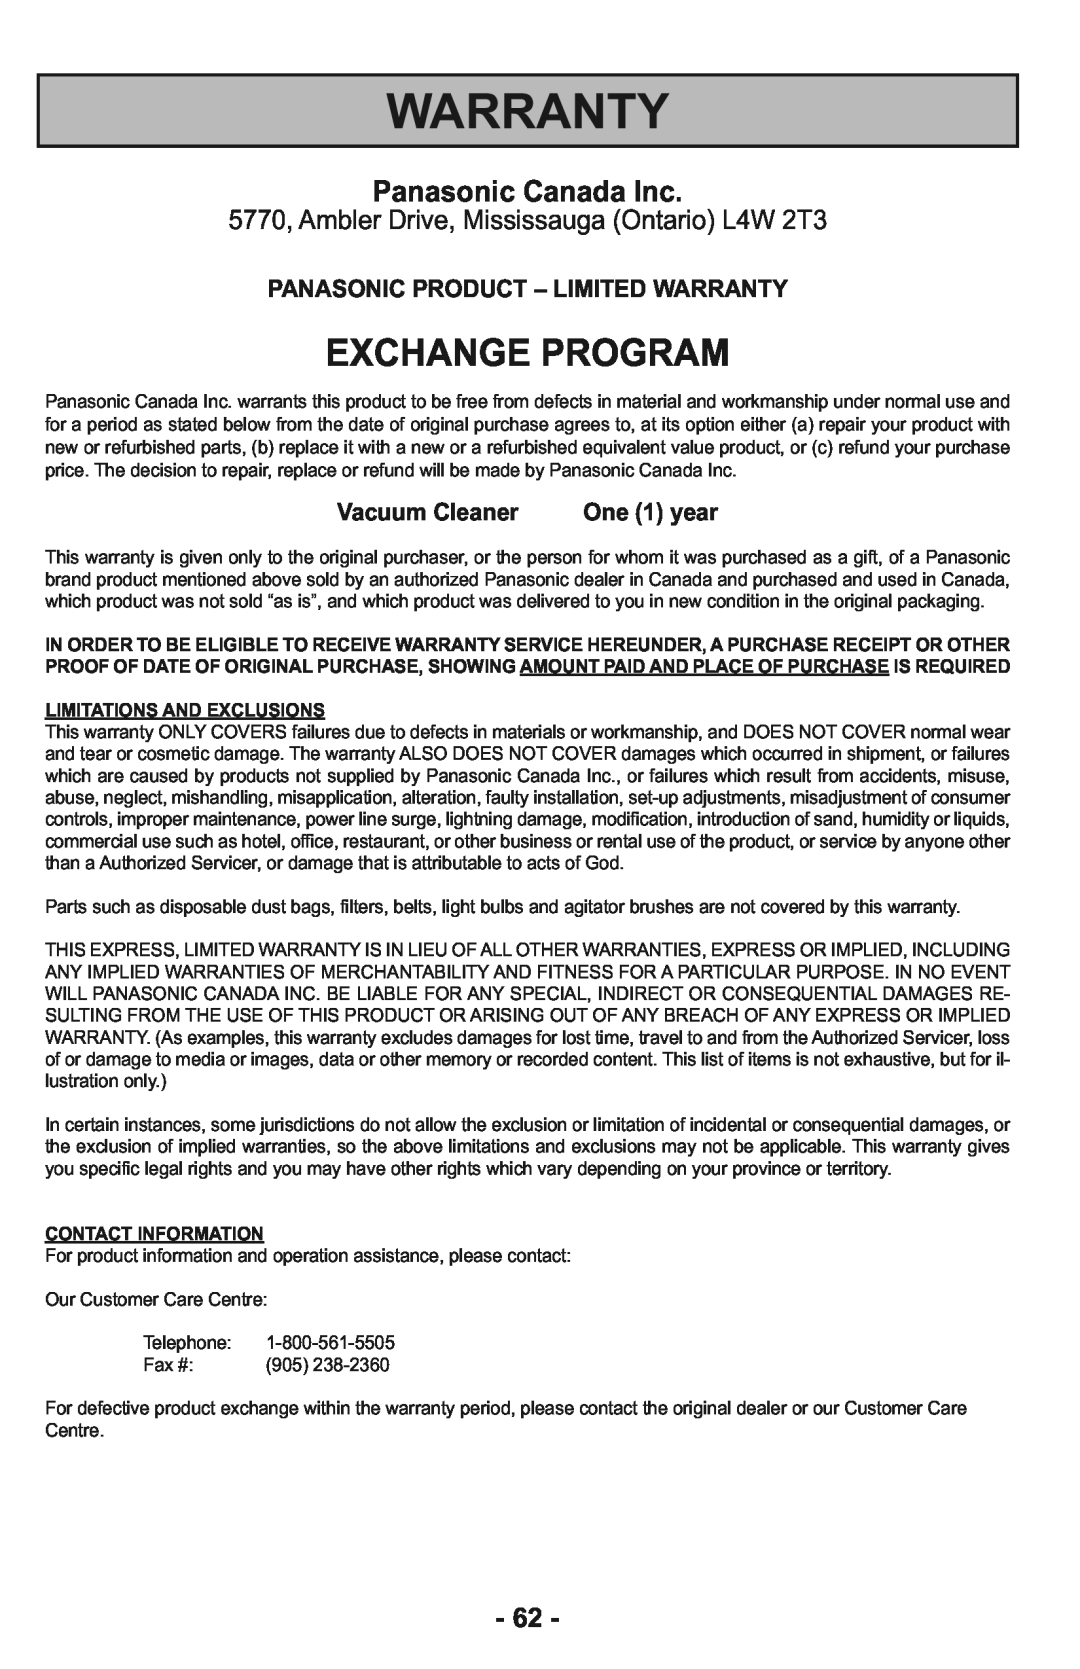 Panasonic MC-CG937 Warranty, Exchange Program, Panasonic Canada Inc, 5770, Ambler Drive, Mississauga Ontario L4W 2T3 